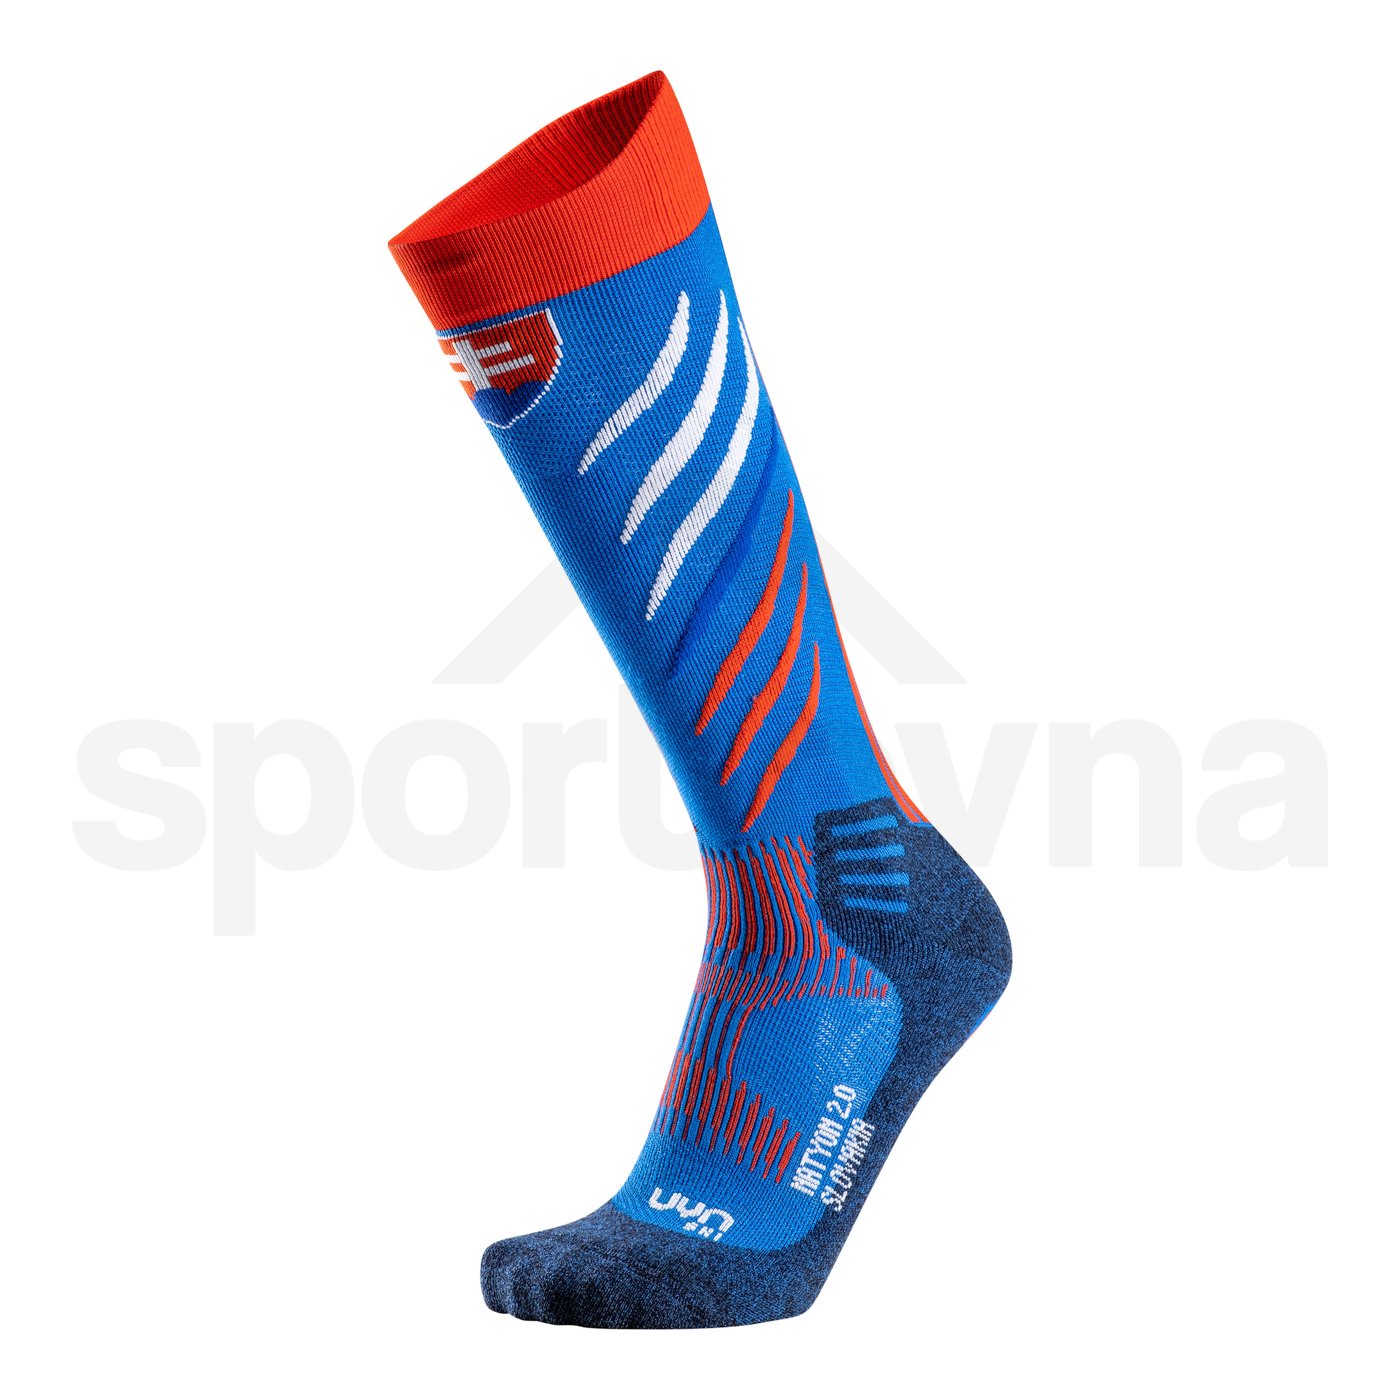 Natyon 2.0 Socks_Slovakia